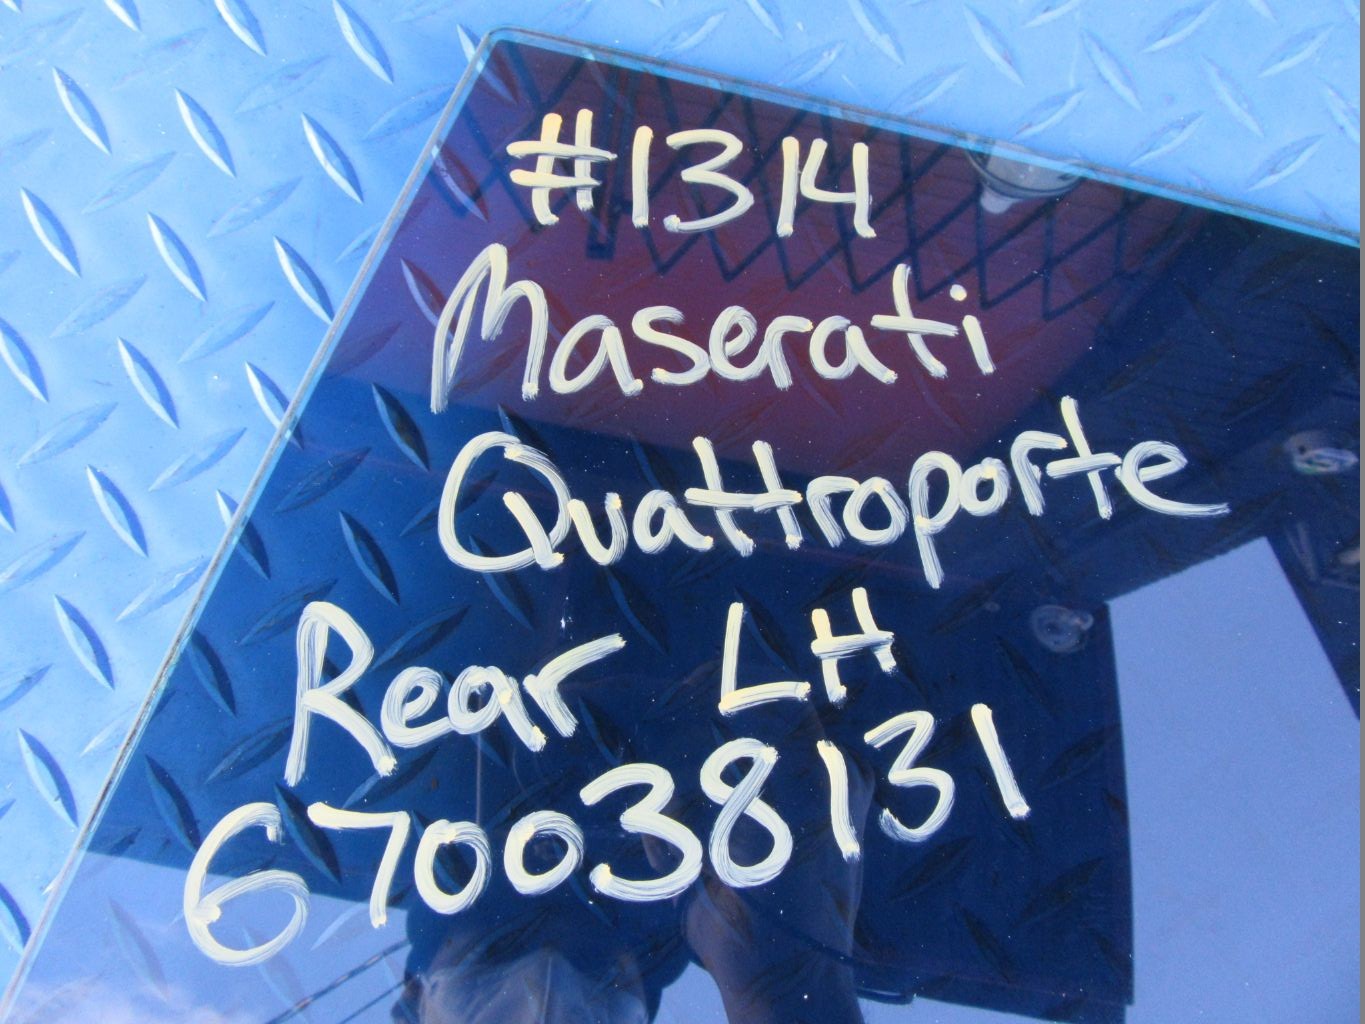 Maserati Quattroporte left rear door window glass #1314